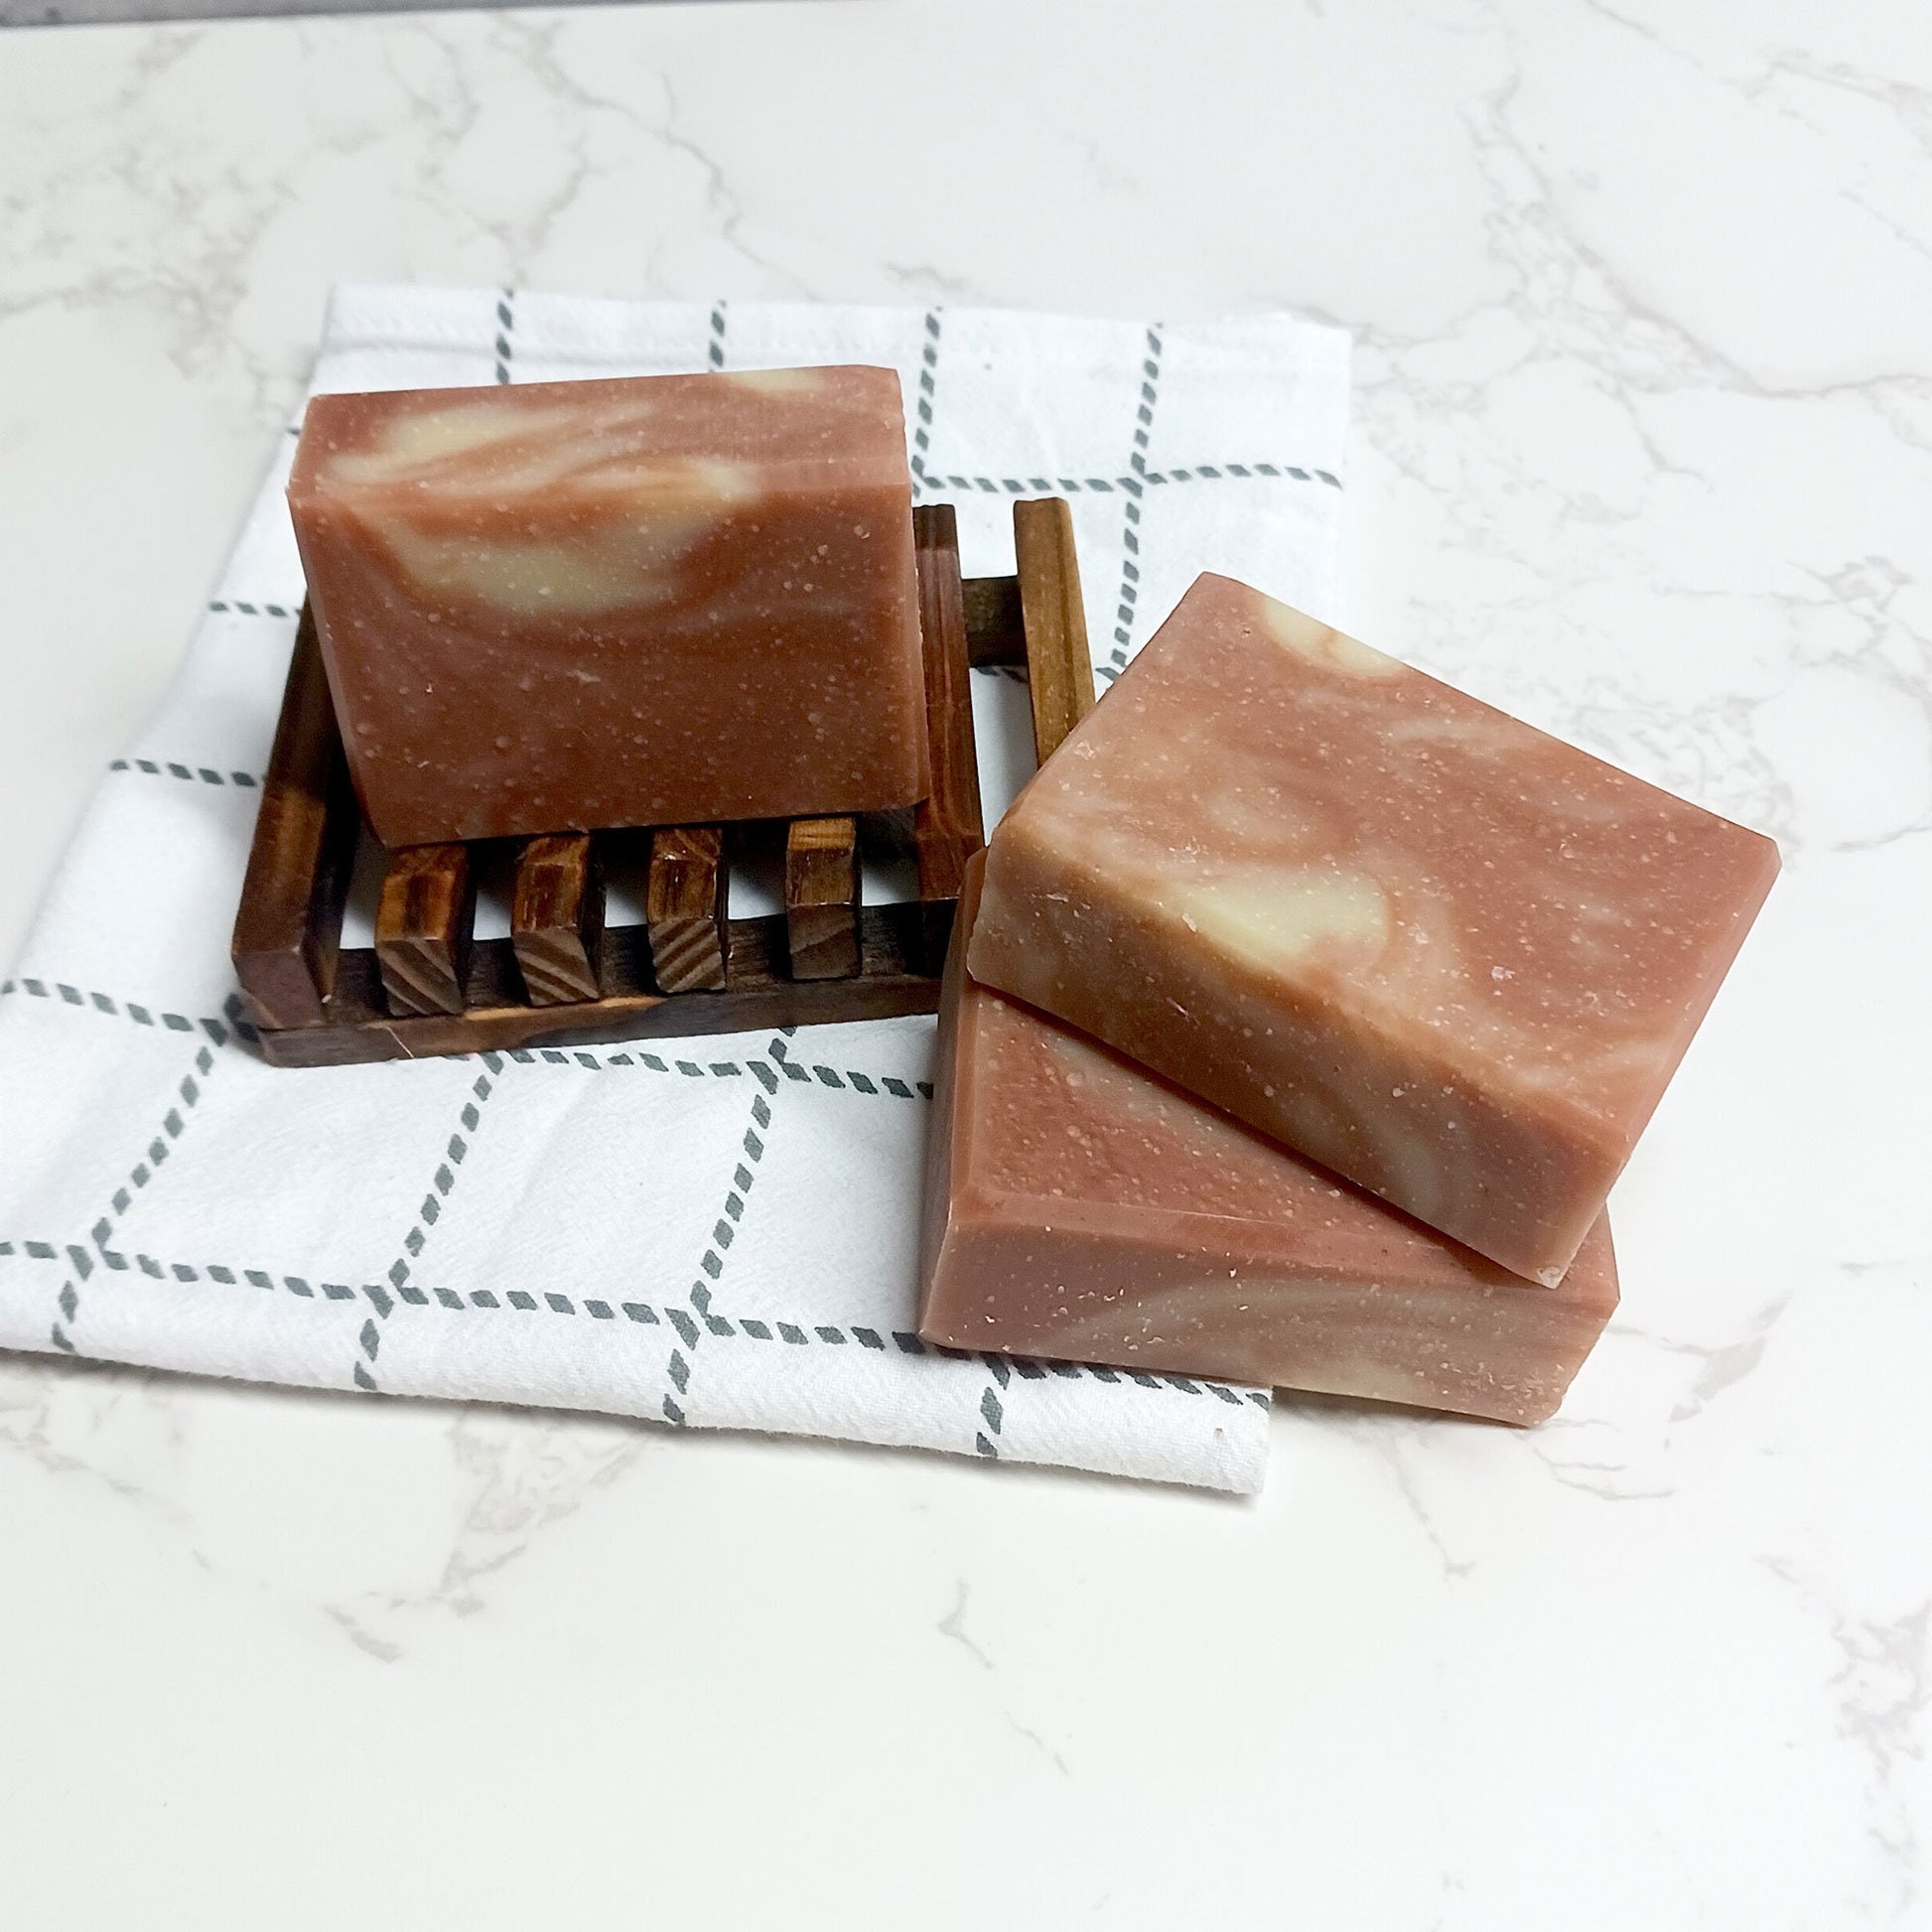 Sizzling Bacon Handmade Bar Soap